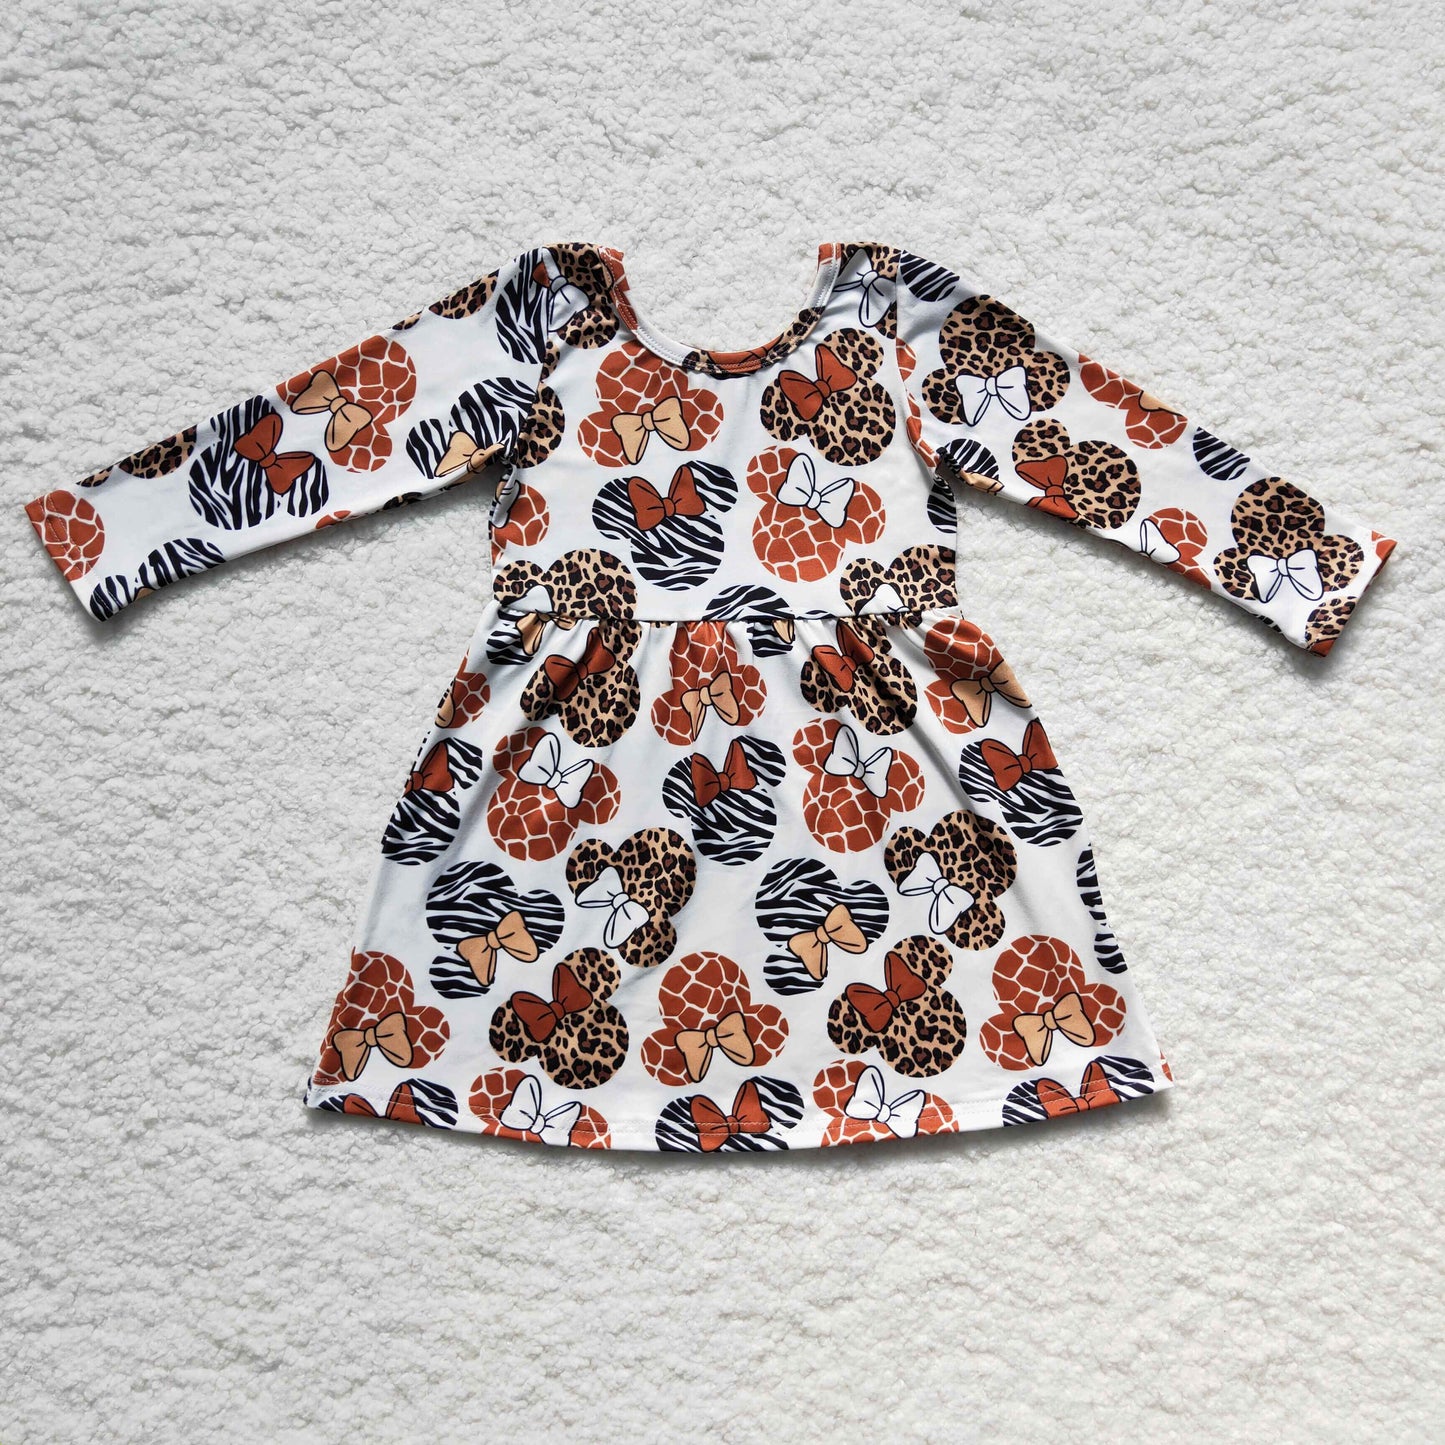 Leopard zebra giraff mouse print baby girls long sleeves dress